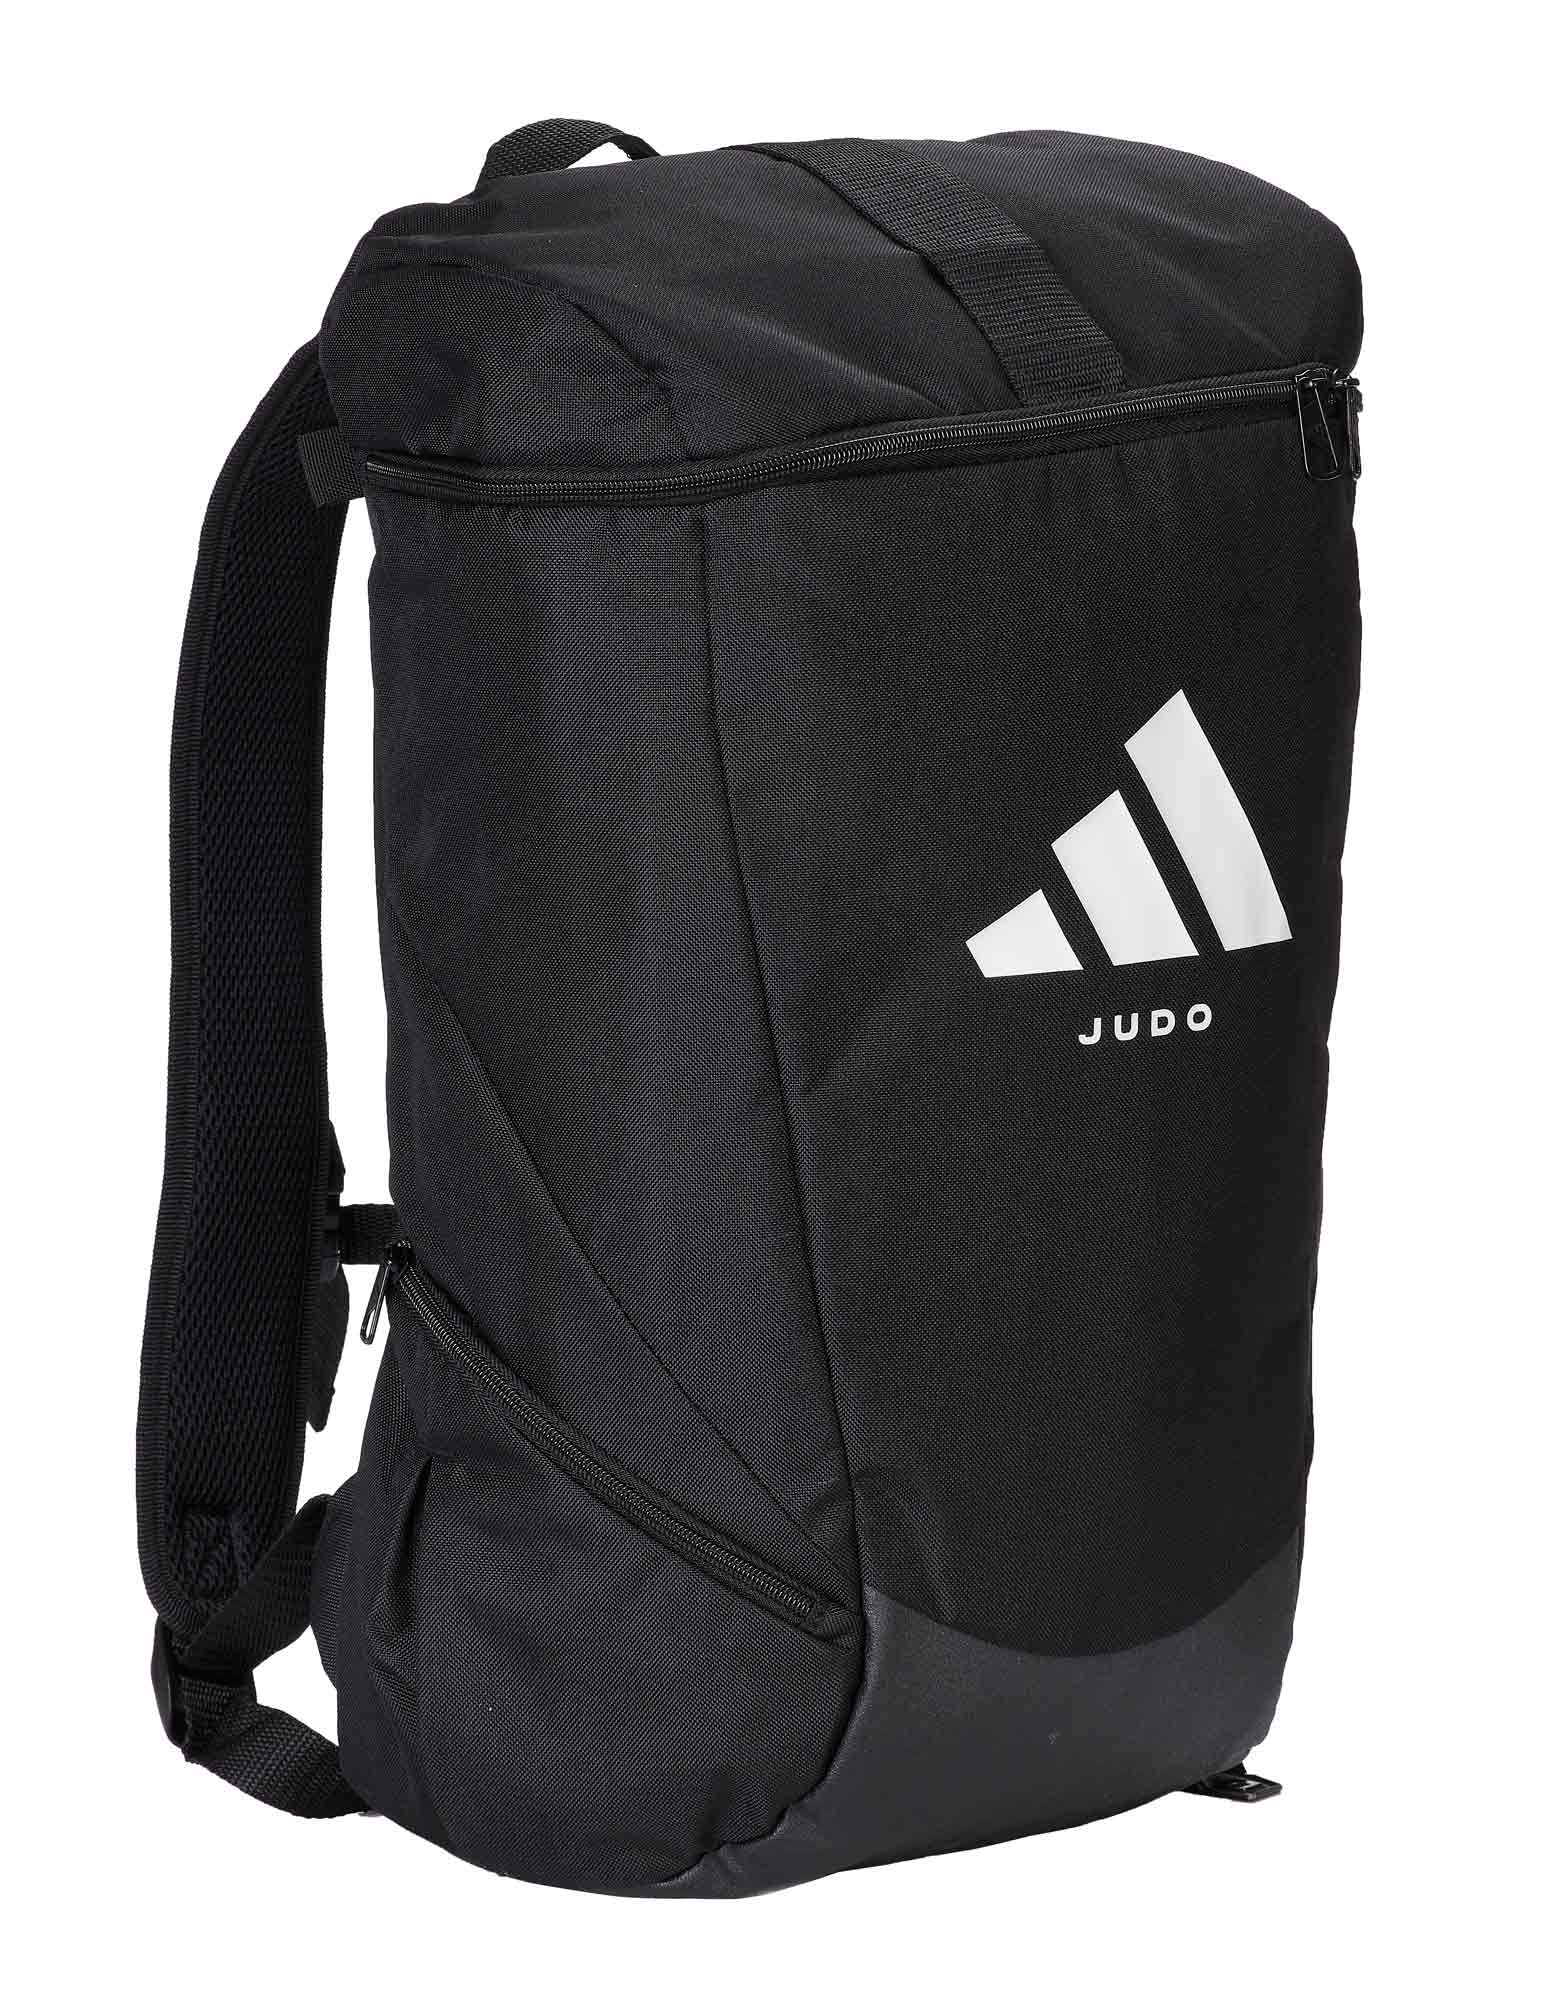 adidas Backpack Judo adiACC090J, black/white